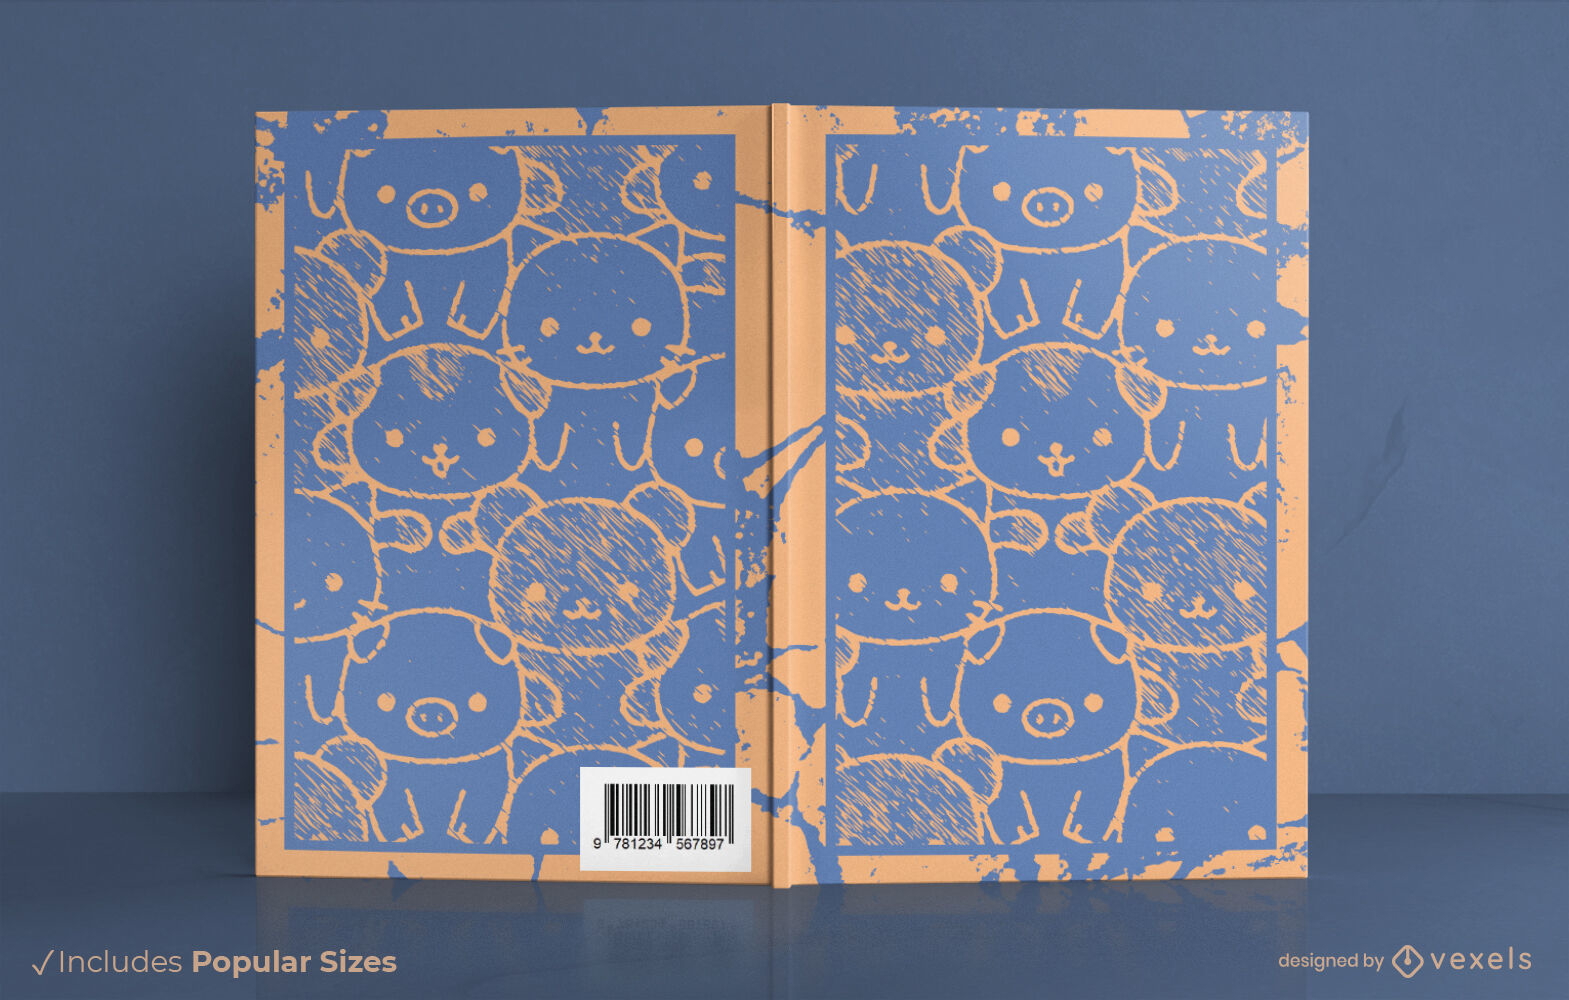 Kawaii animals duotone book cover design